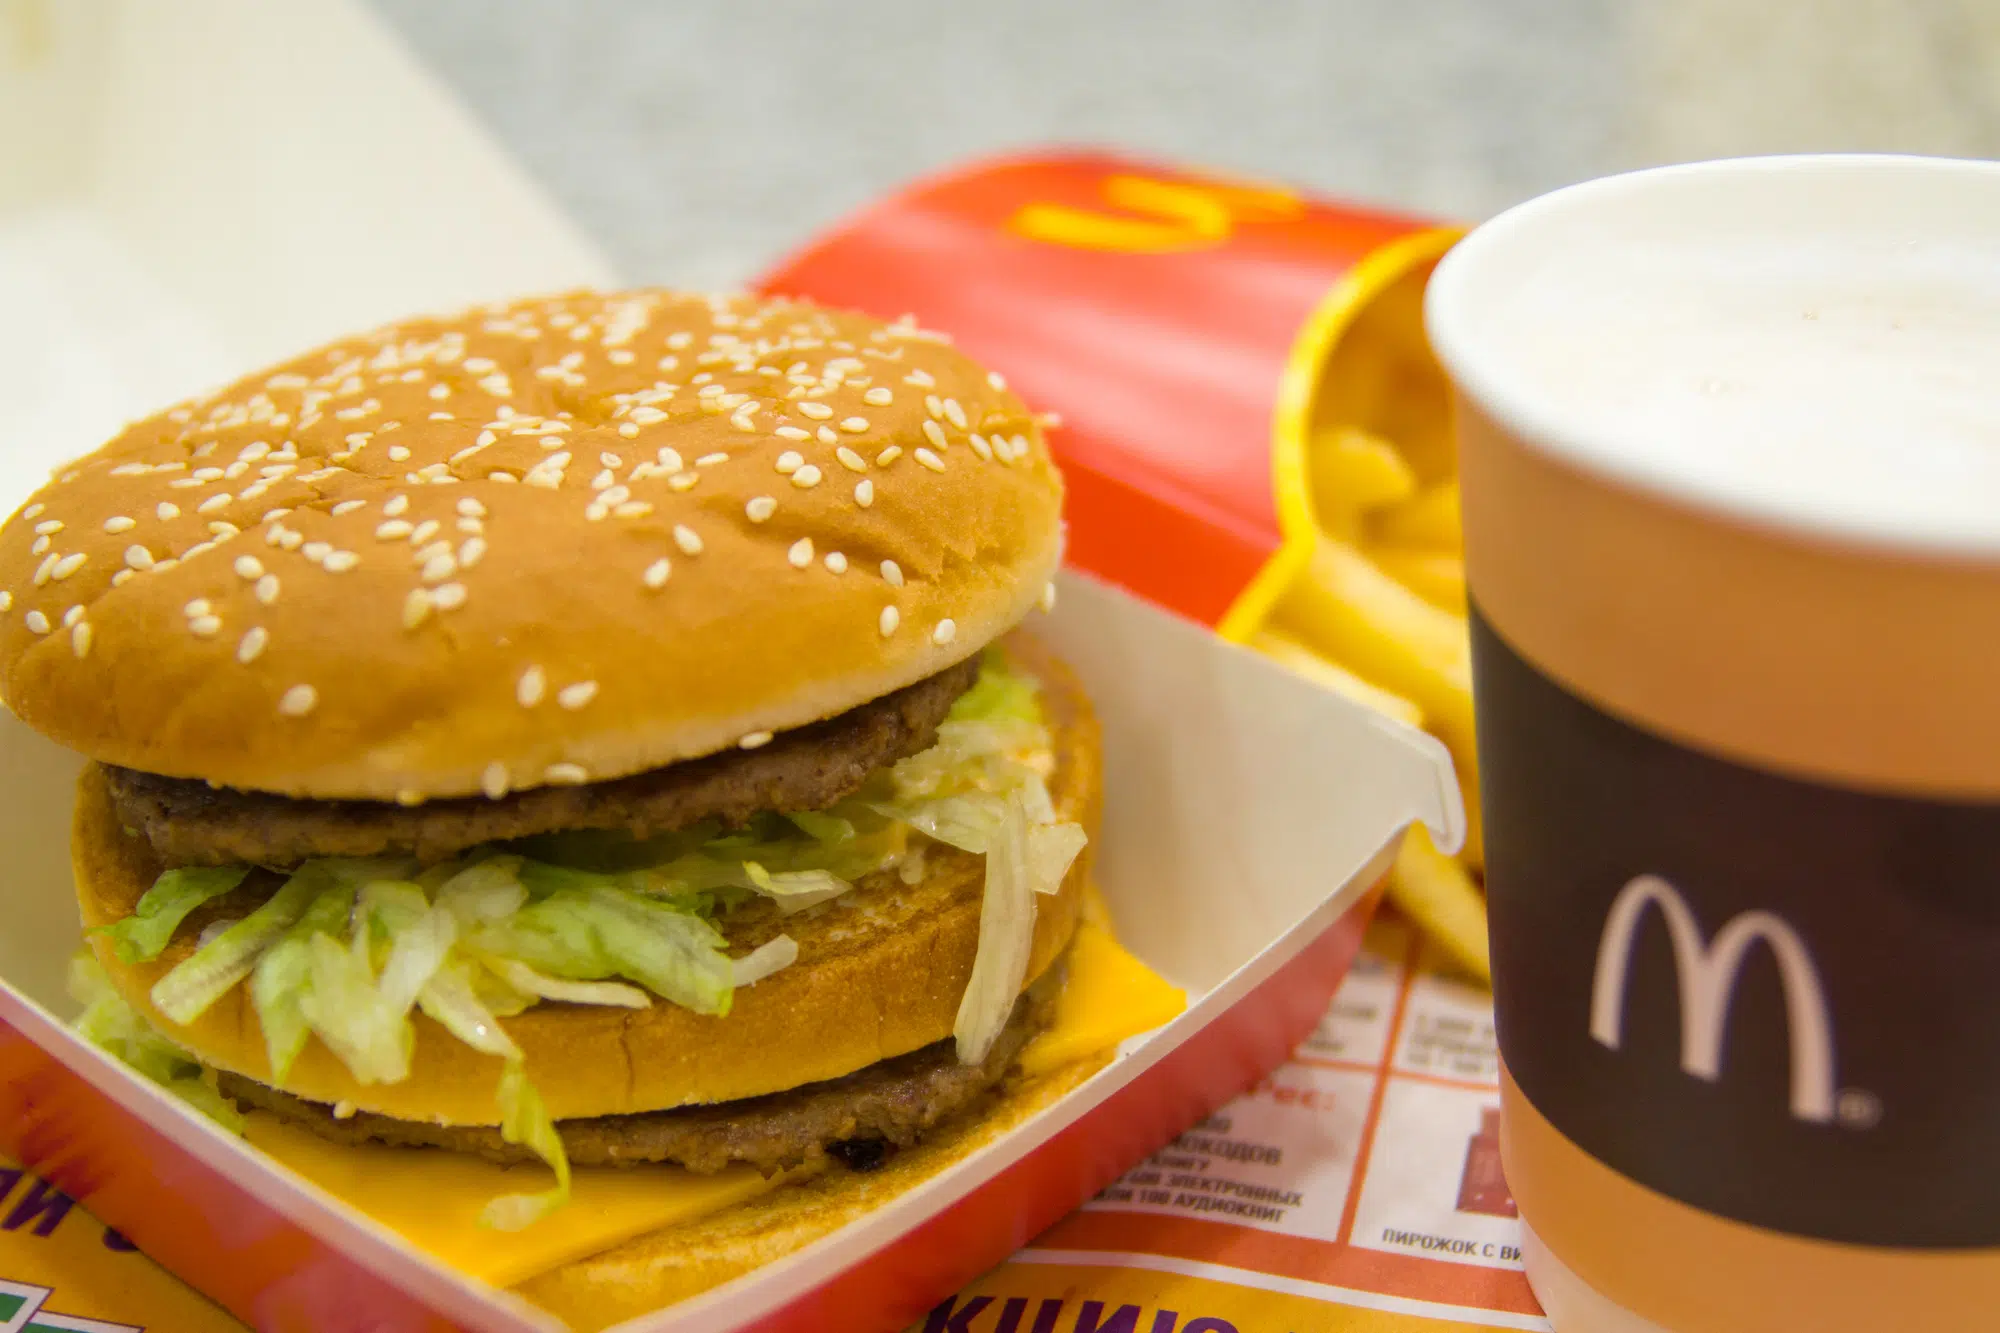 Hamburger menu in McDonald's restaurant. Fries, coffee capuccino, Big Mac. Fastfood and junk food concept